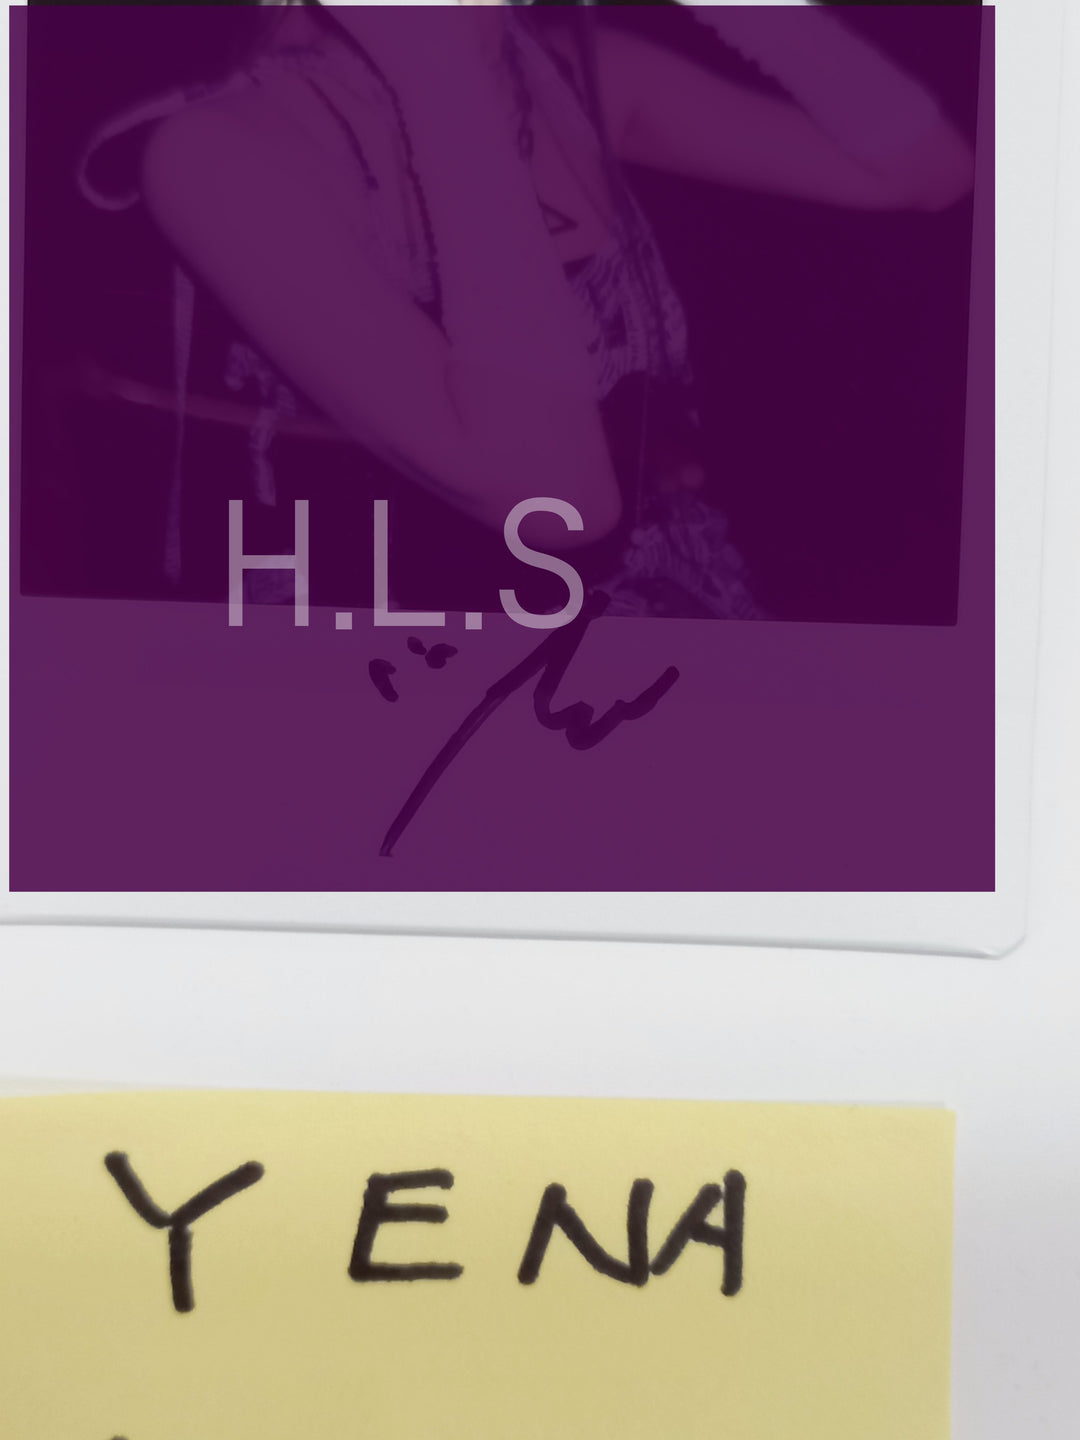 YENA "Good Morning" - Hand Autographed(Signed) Polaroid [24.3.15]